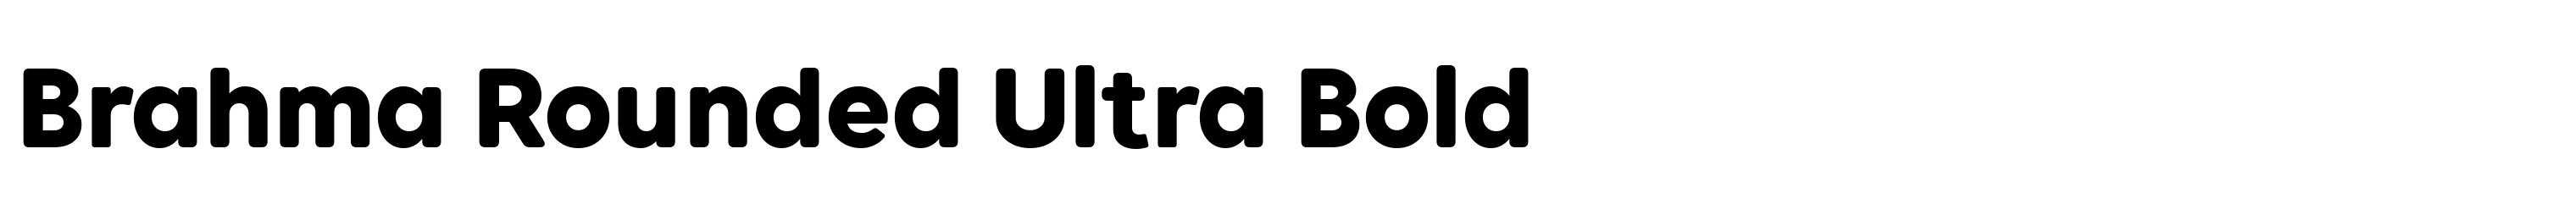 Brahma Rounded Ultra Bold